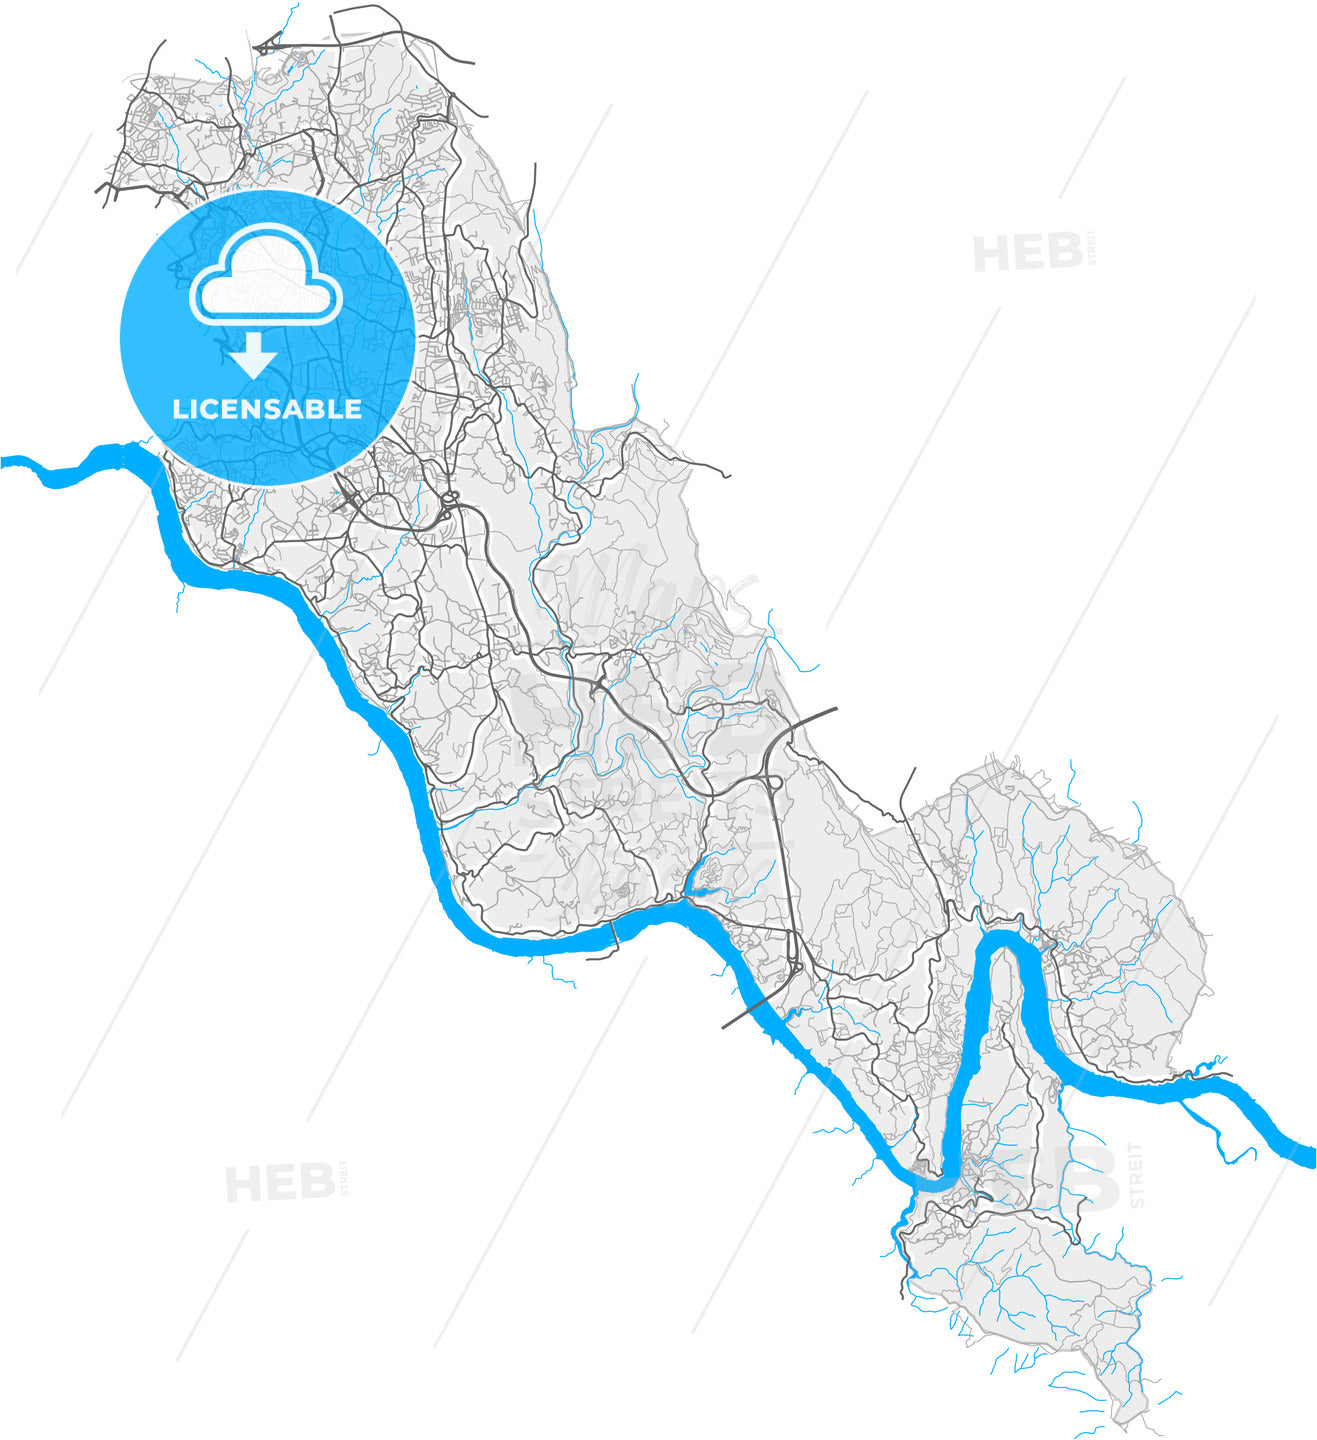 Gondomar, Porto, Portugal, high quality vector map